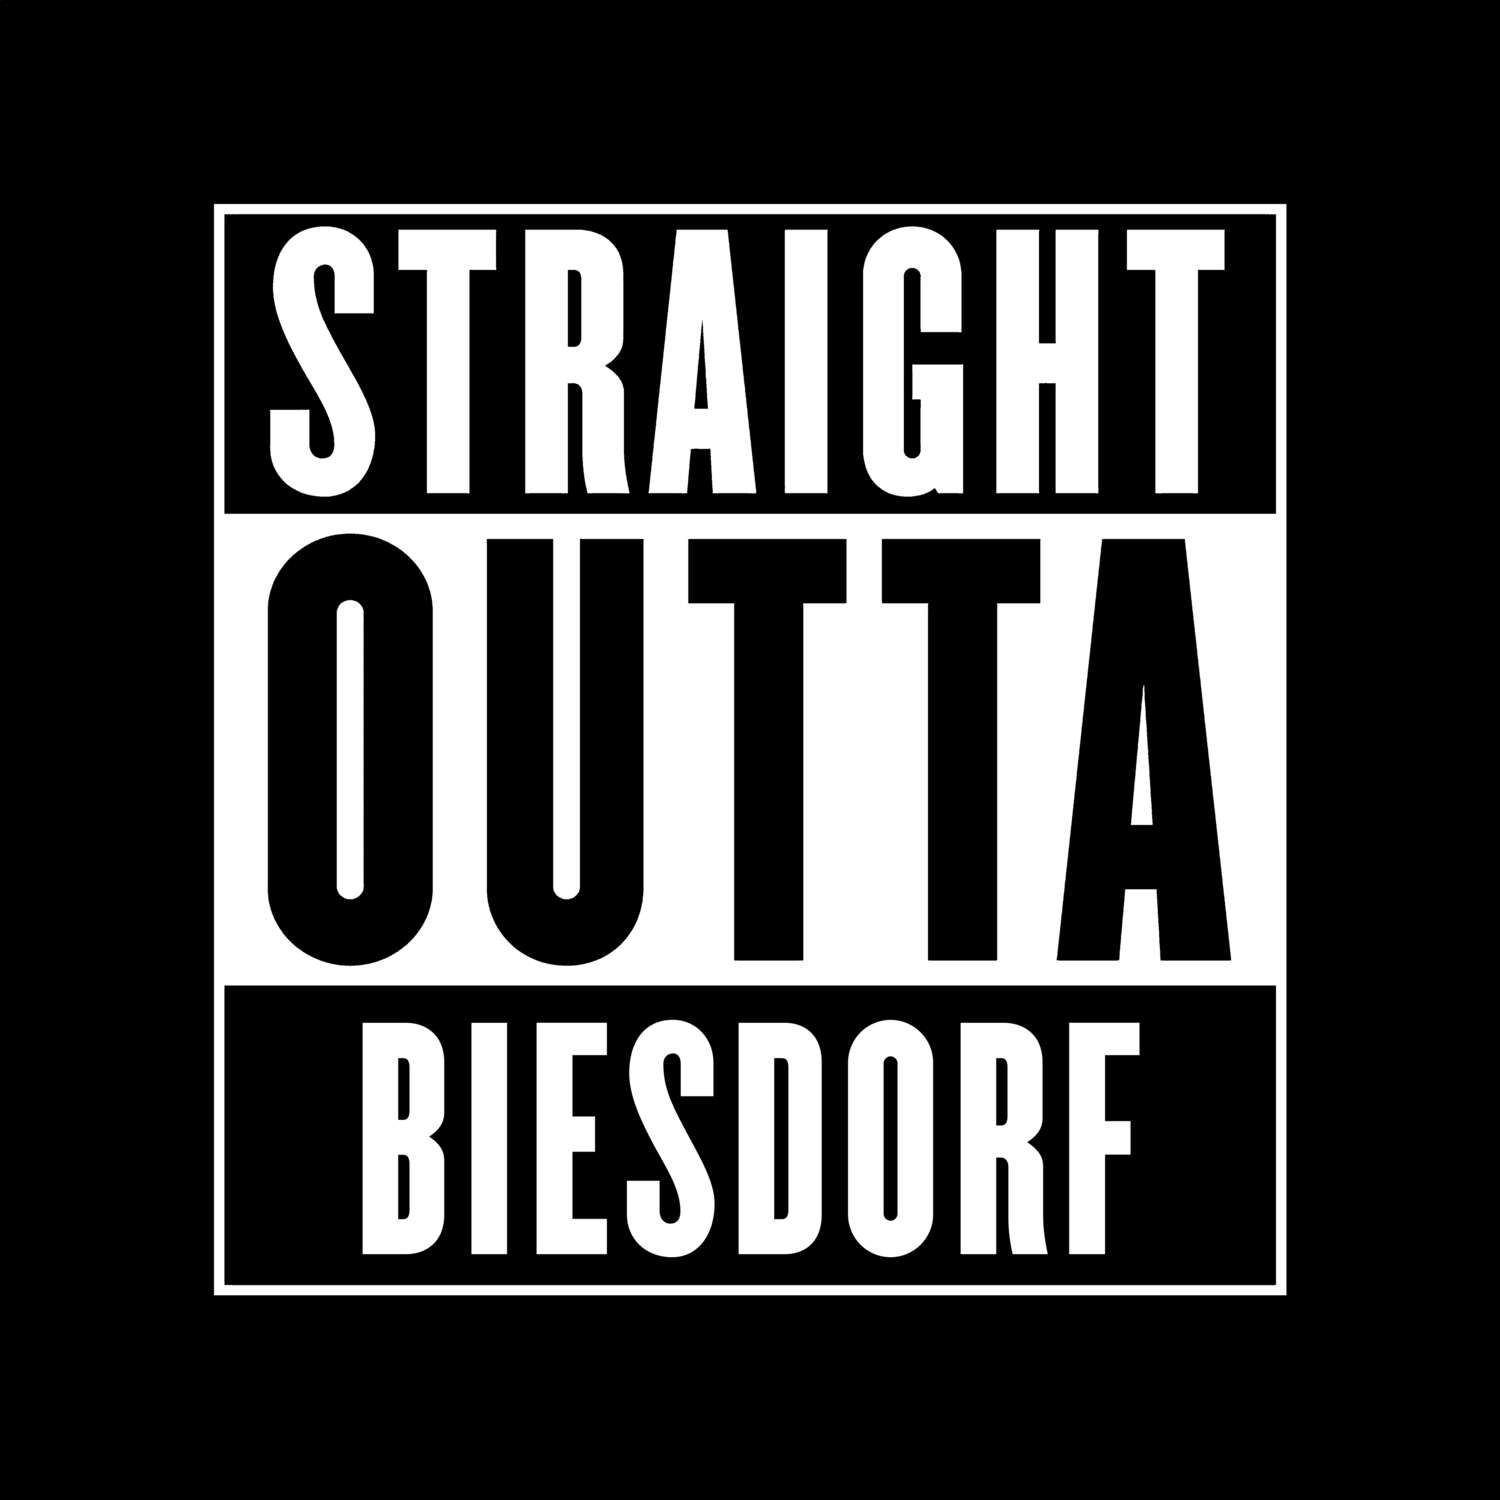 Biesdorf T-Shirt »Straight Outta«